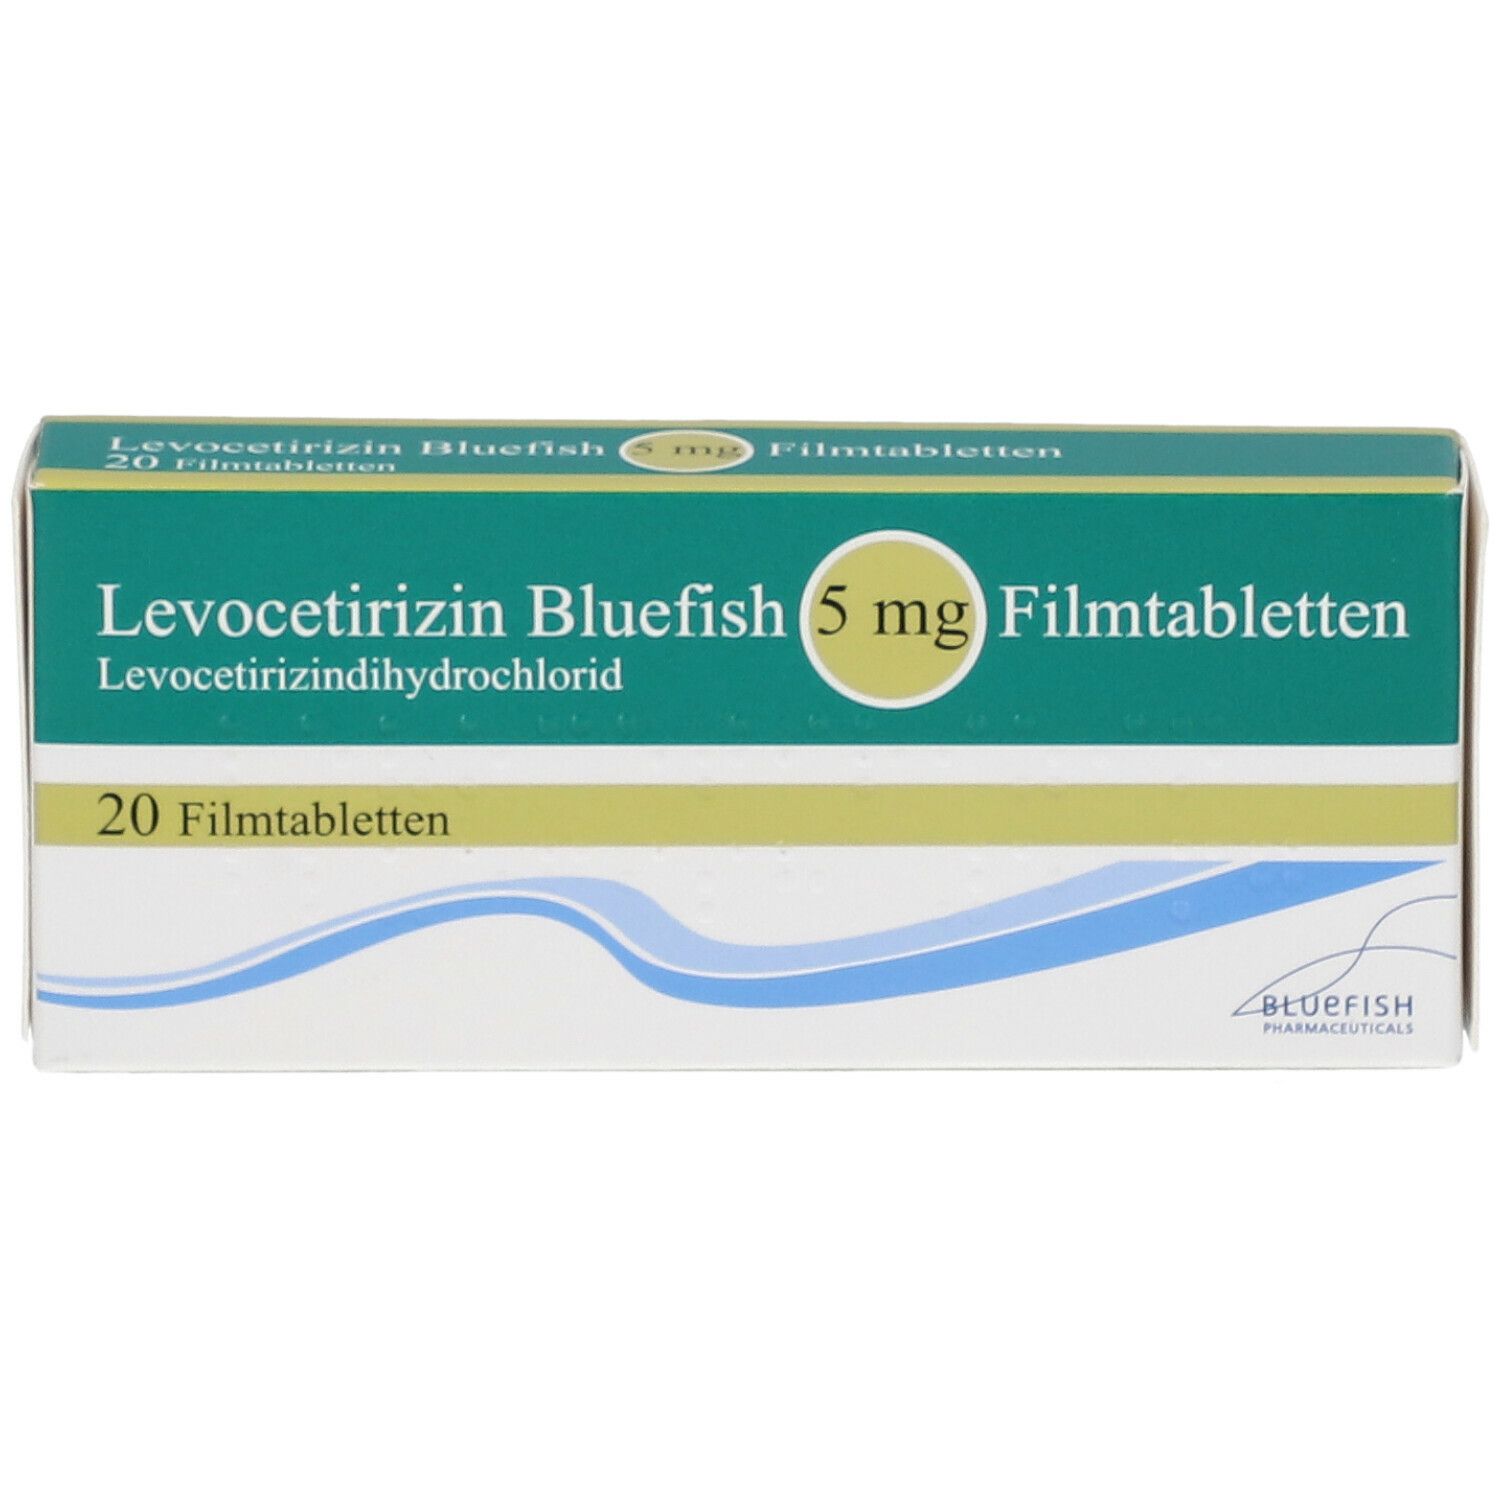 Levocetirizin Bluefish 5 mg